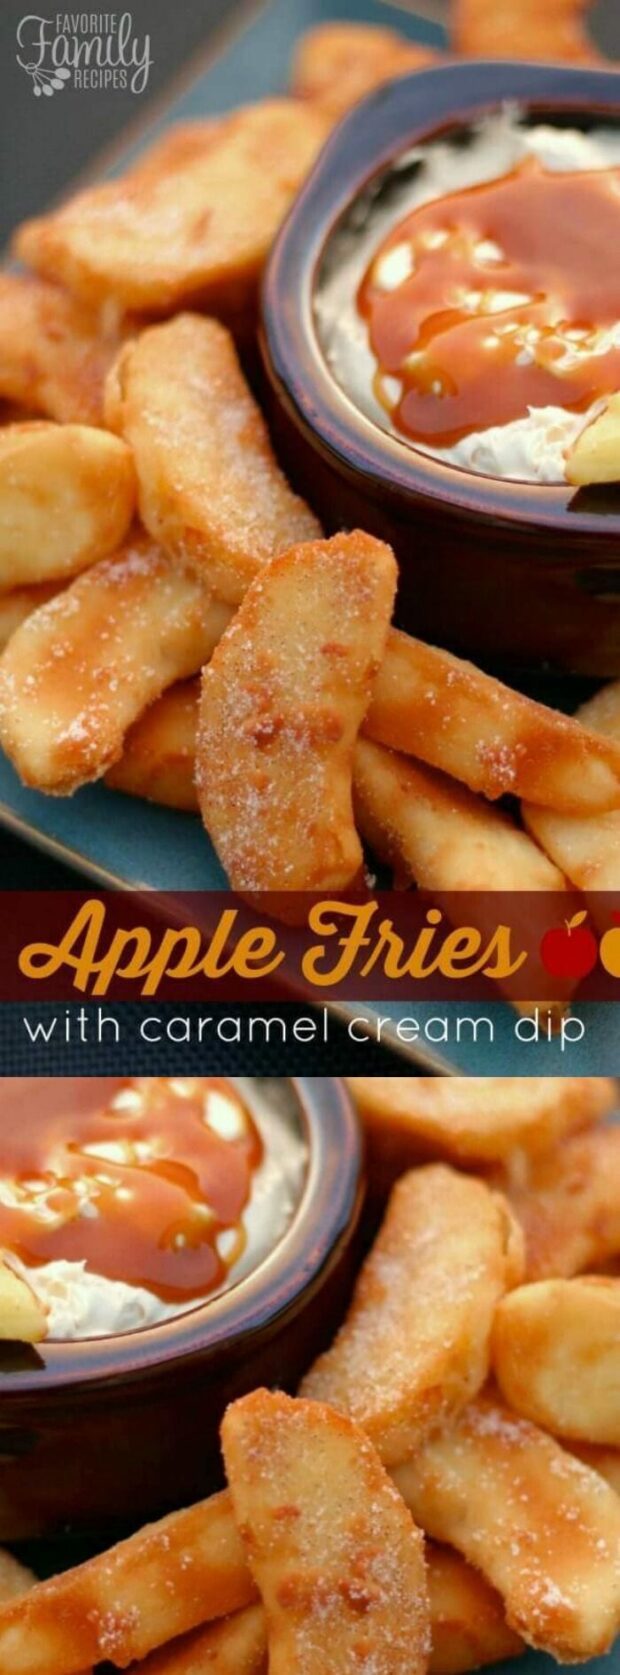 13 Easy Apple Dessert Recipes (Part 1) - Thanksgiving Apple Dessert Recipes, Holiday Apple Desserts, apple desserts, Apple Dessert Recipes